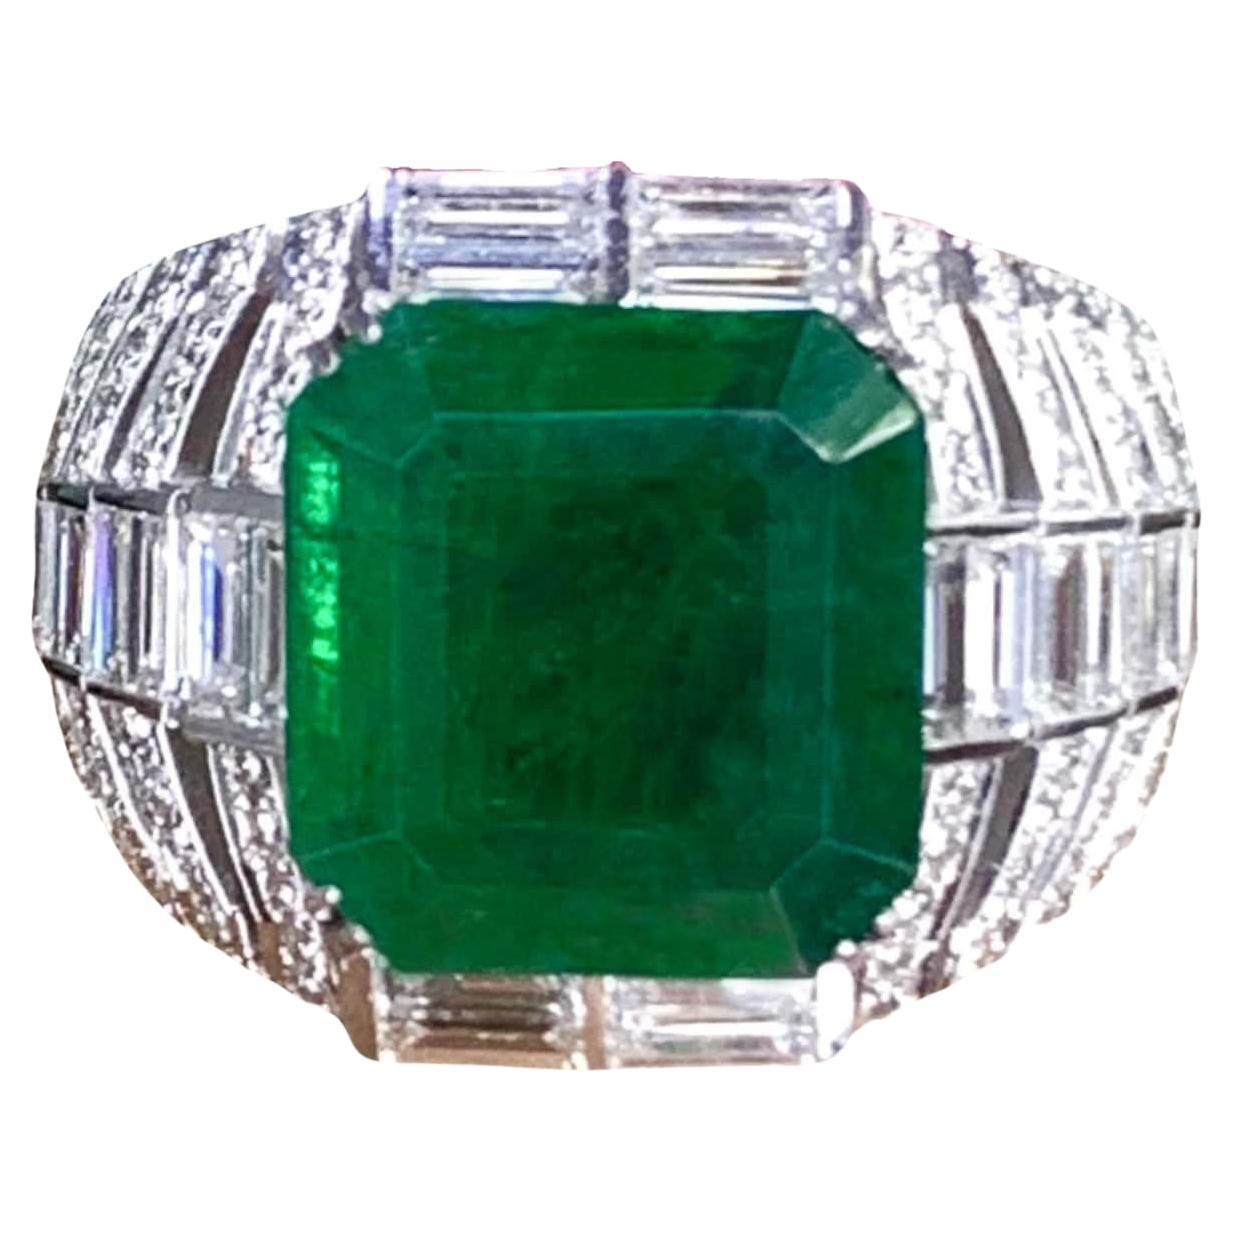 Men's 5.47 Carat Zambian Emerald in 18k White Gold Ring For Sale